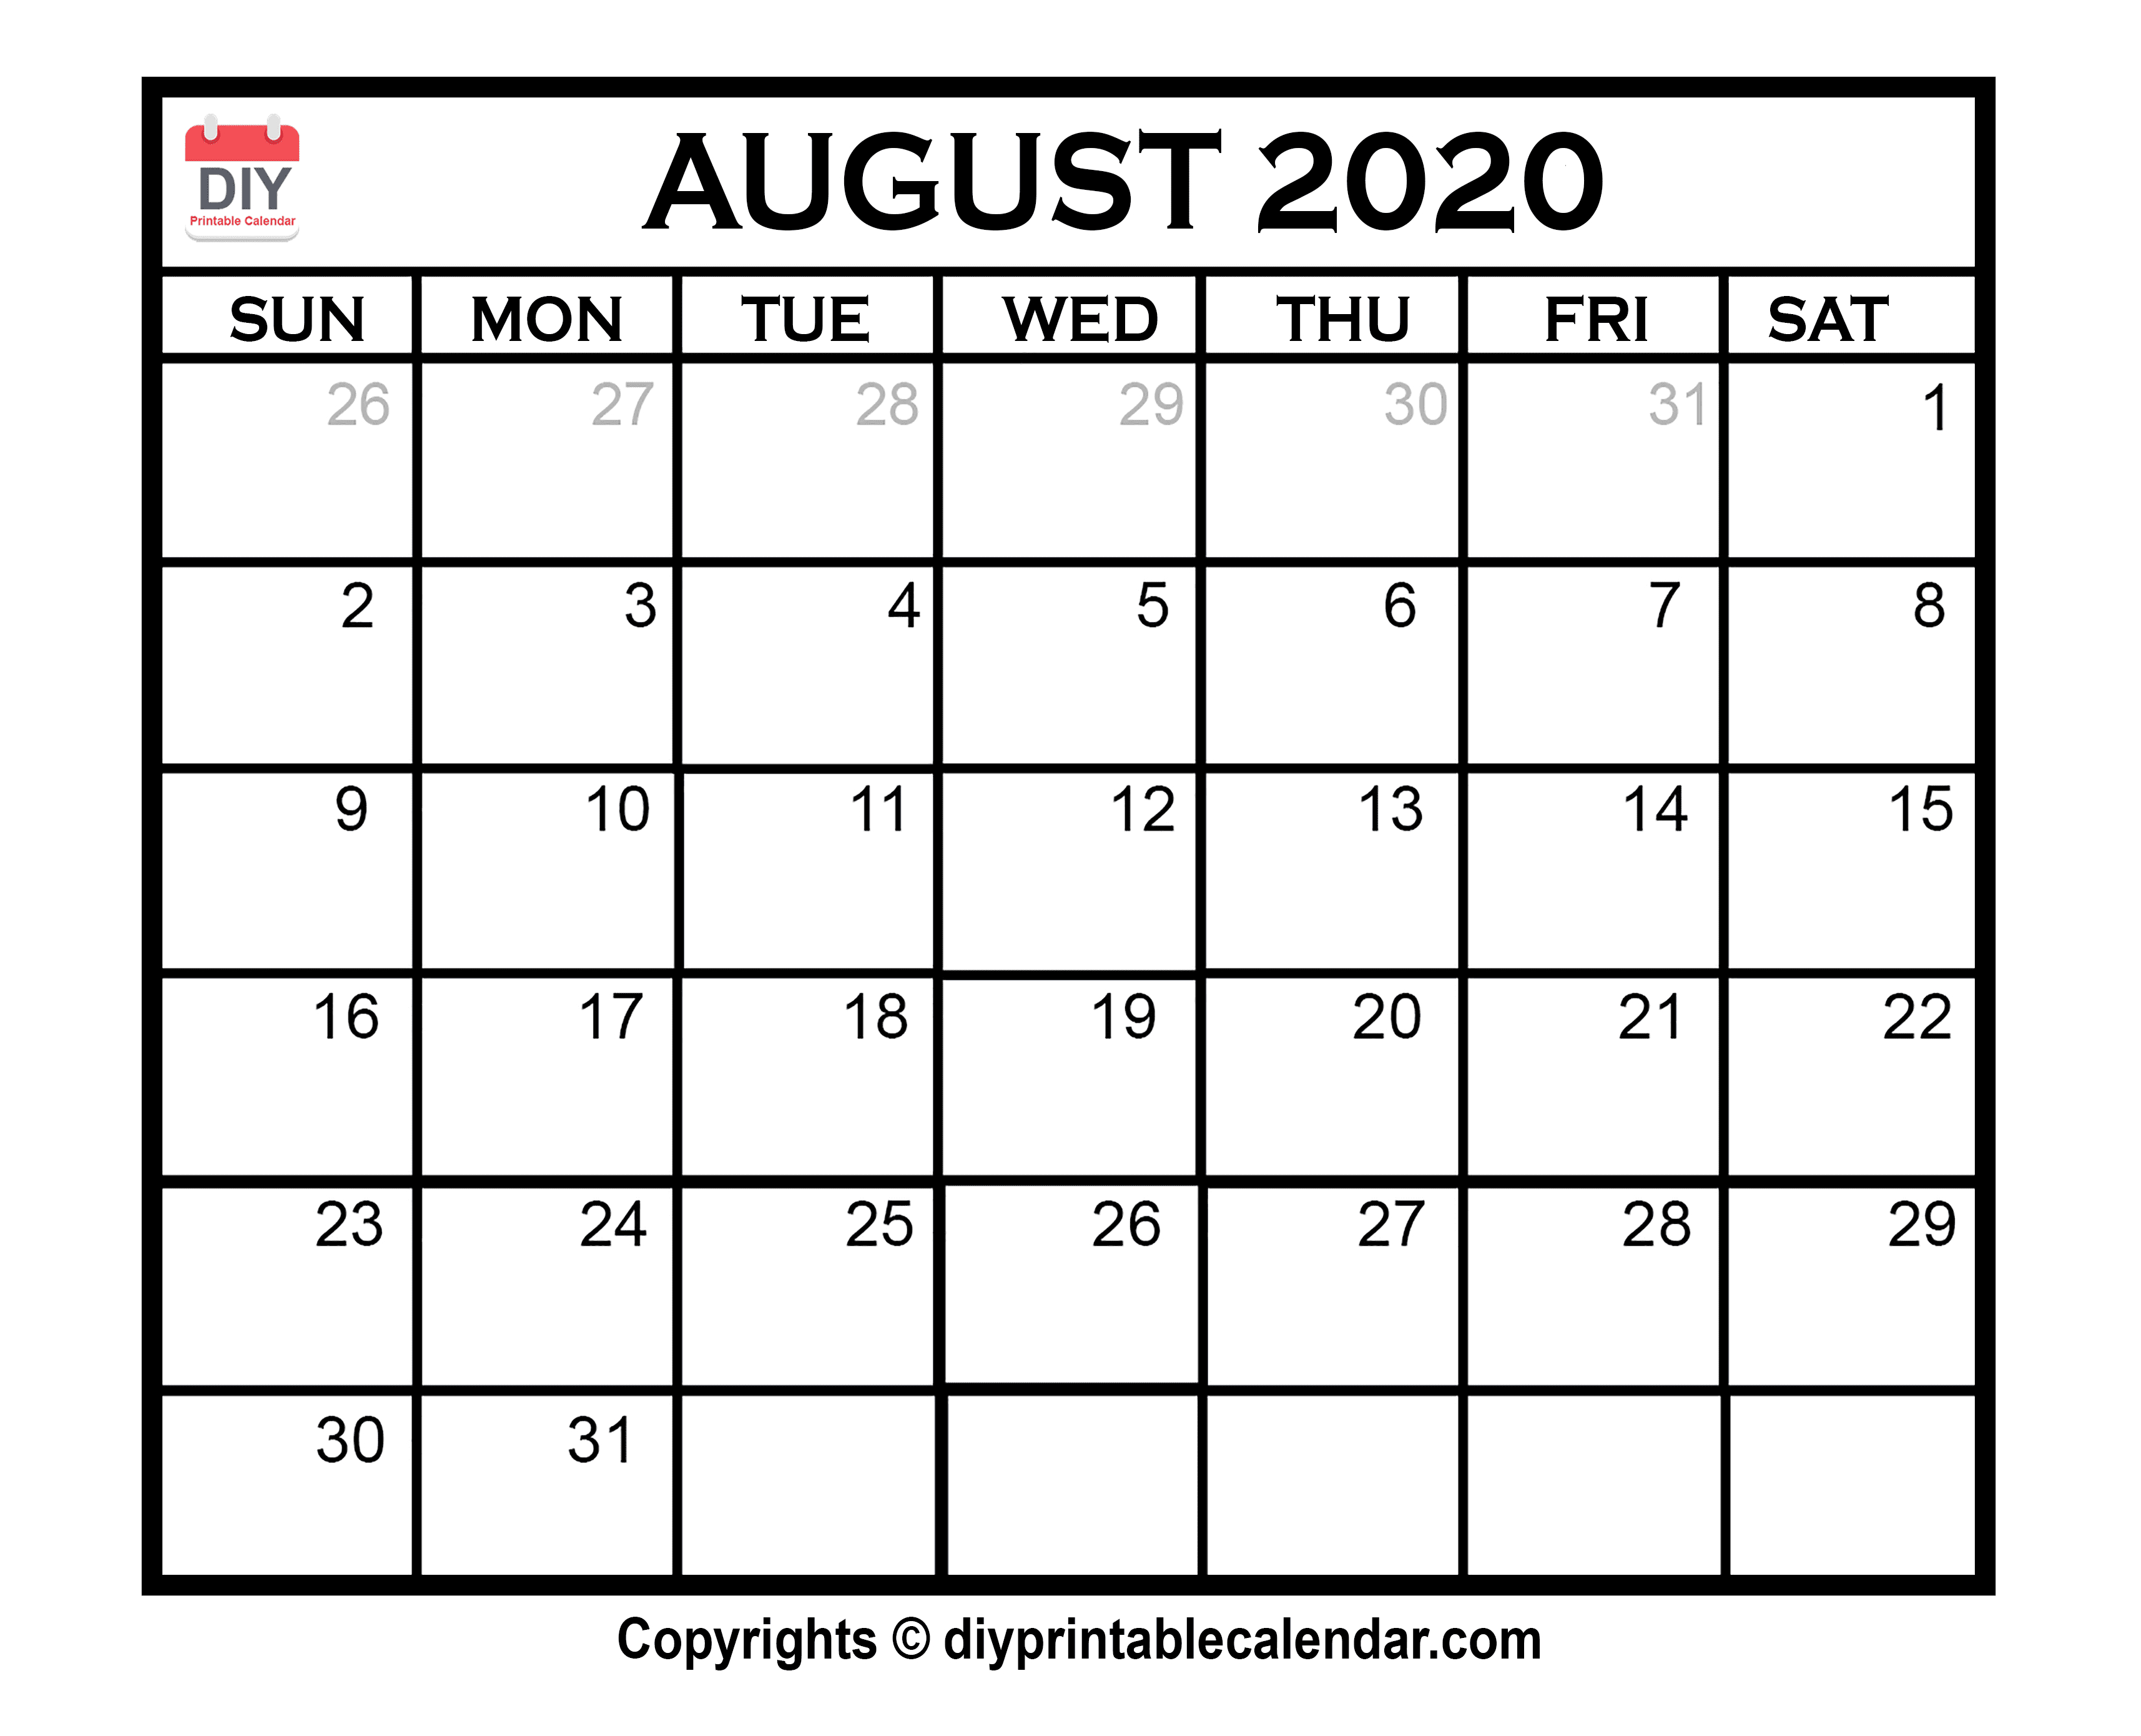 Print A Calendar August 2020 - Wpa.wpart.co